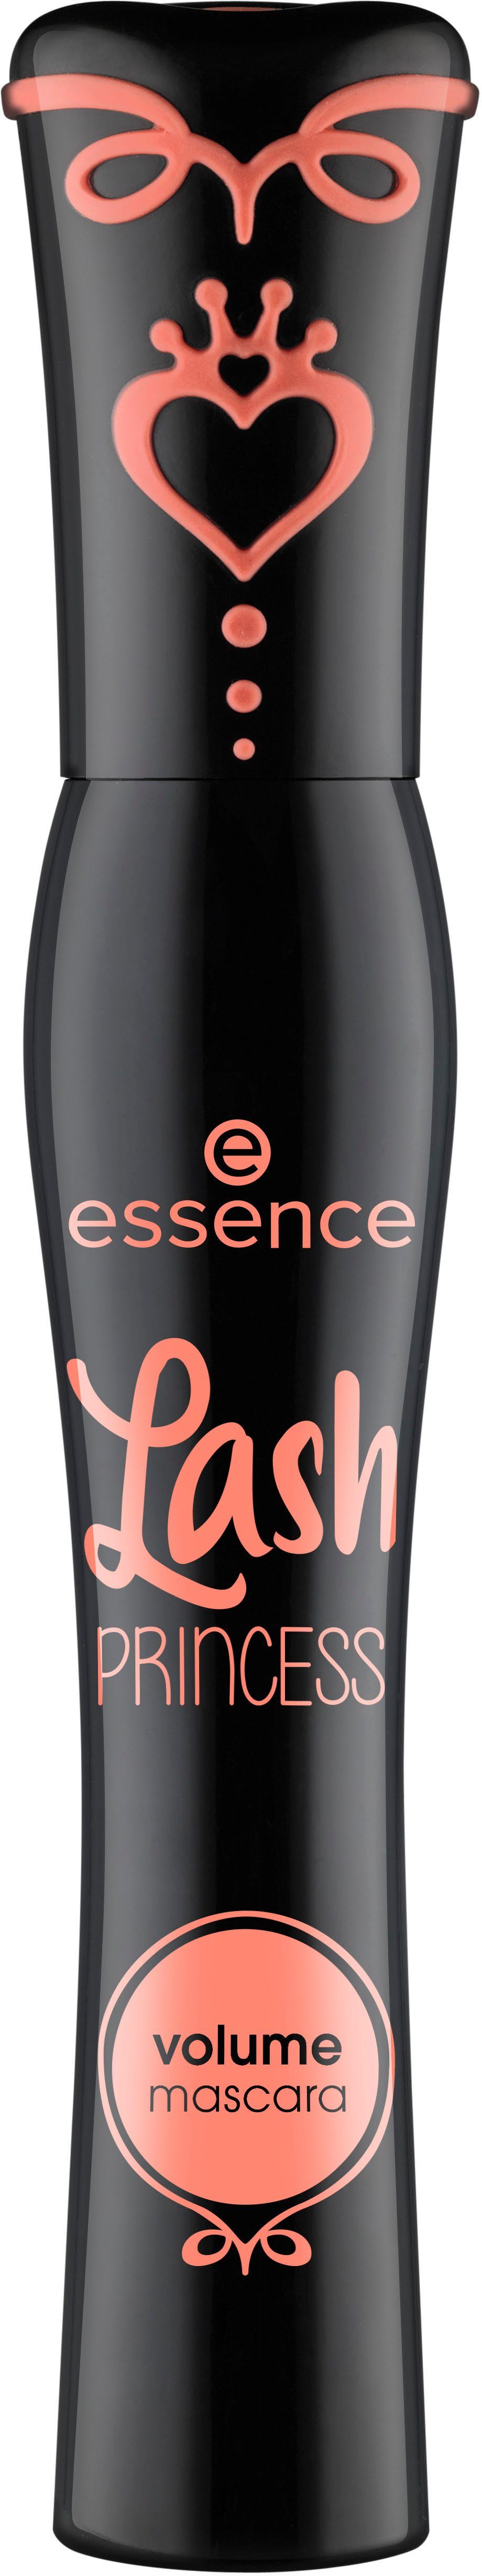 Essence PRINCESS 3-tlg. Lash Mascara volume,